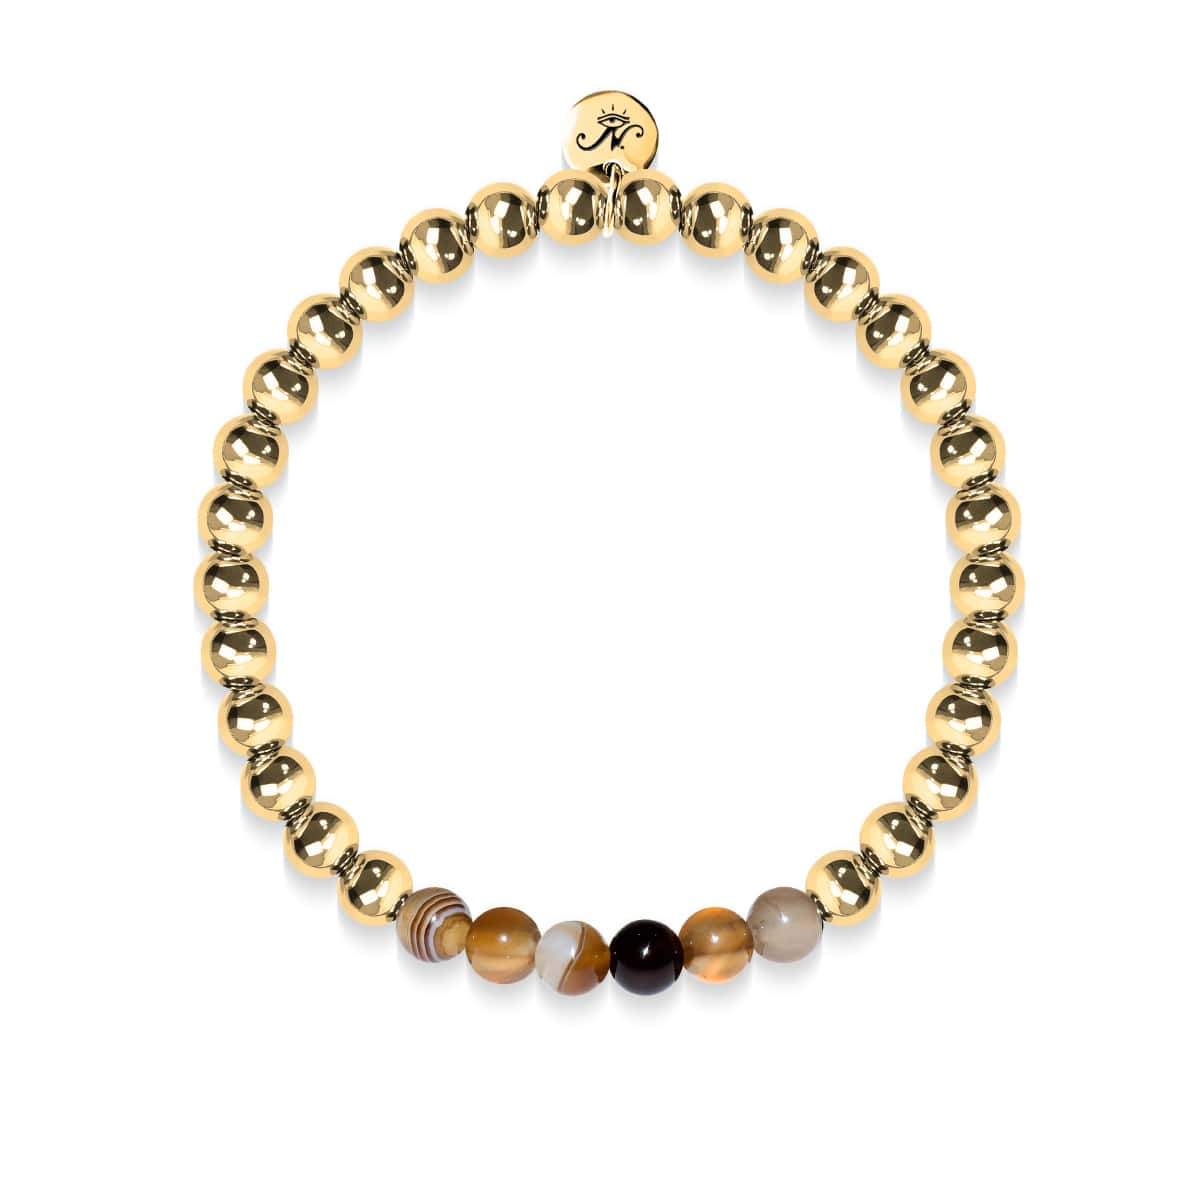 Custom Solid Gold Monogram Bracelet with Diamonds and Sandstone Beads